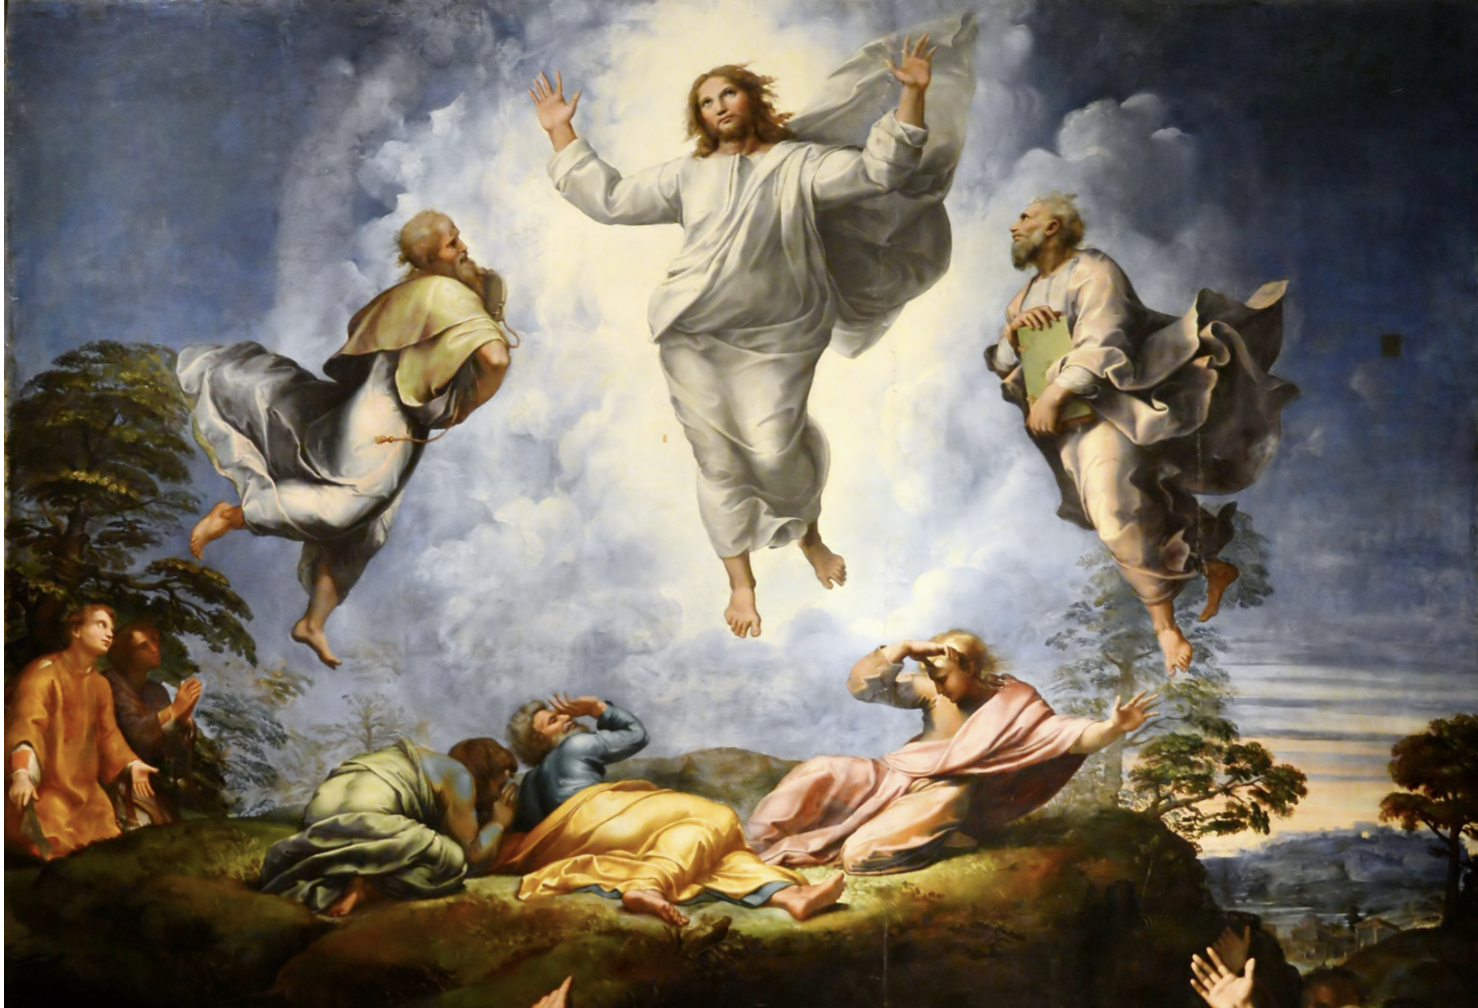 Transfiguration (1516–1520) by Raphael - Public Domain Bible Painting